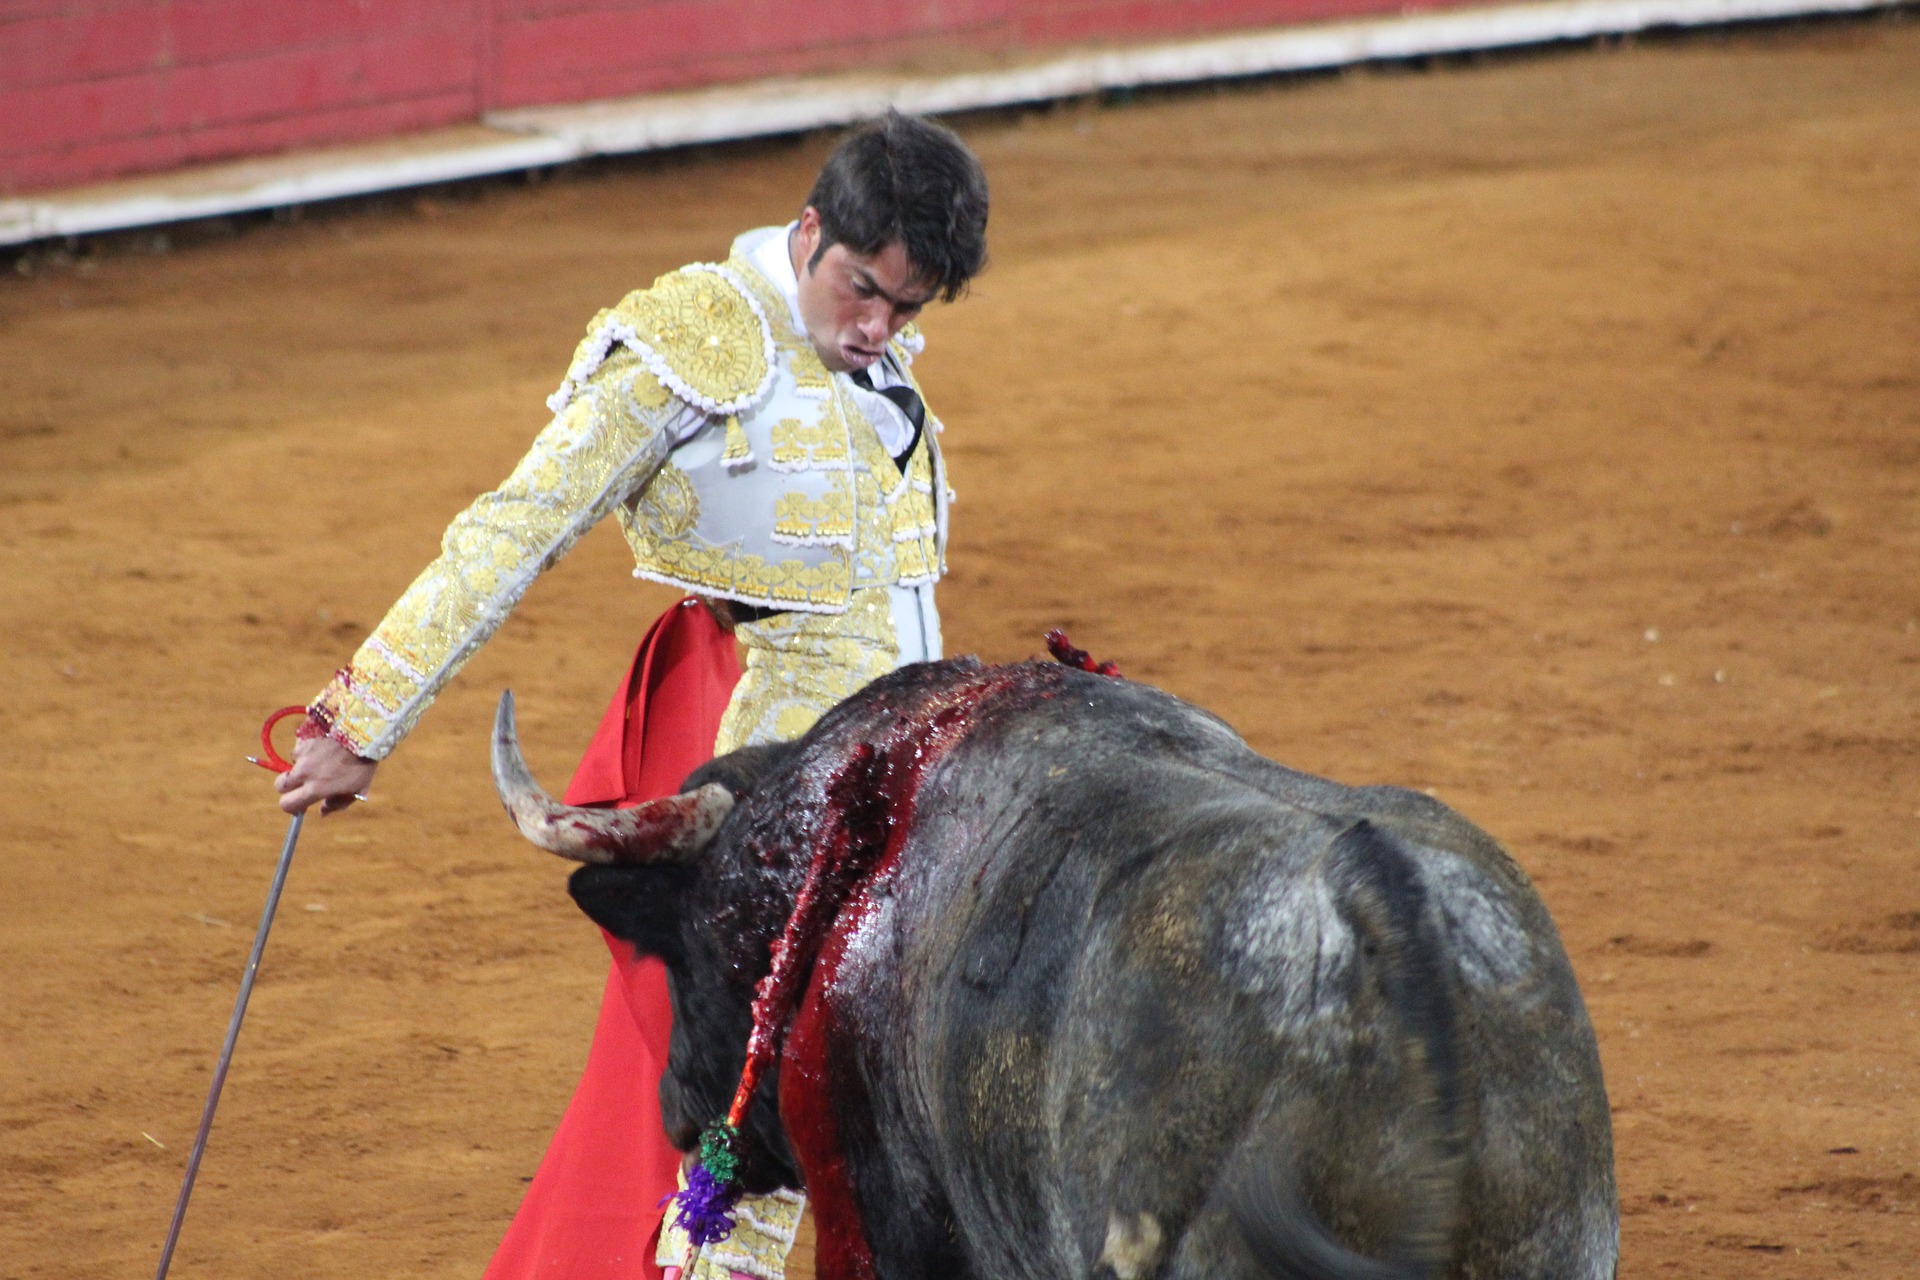 A matador avoids the bull's horns.